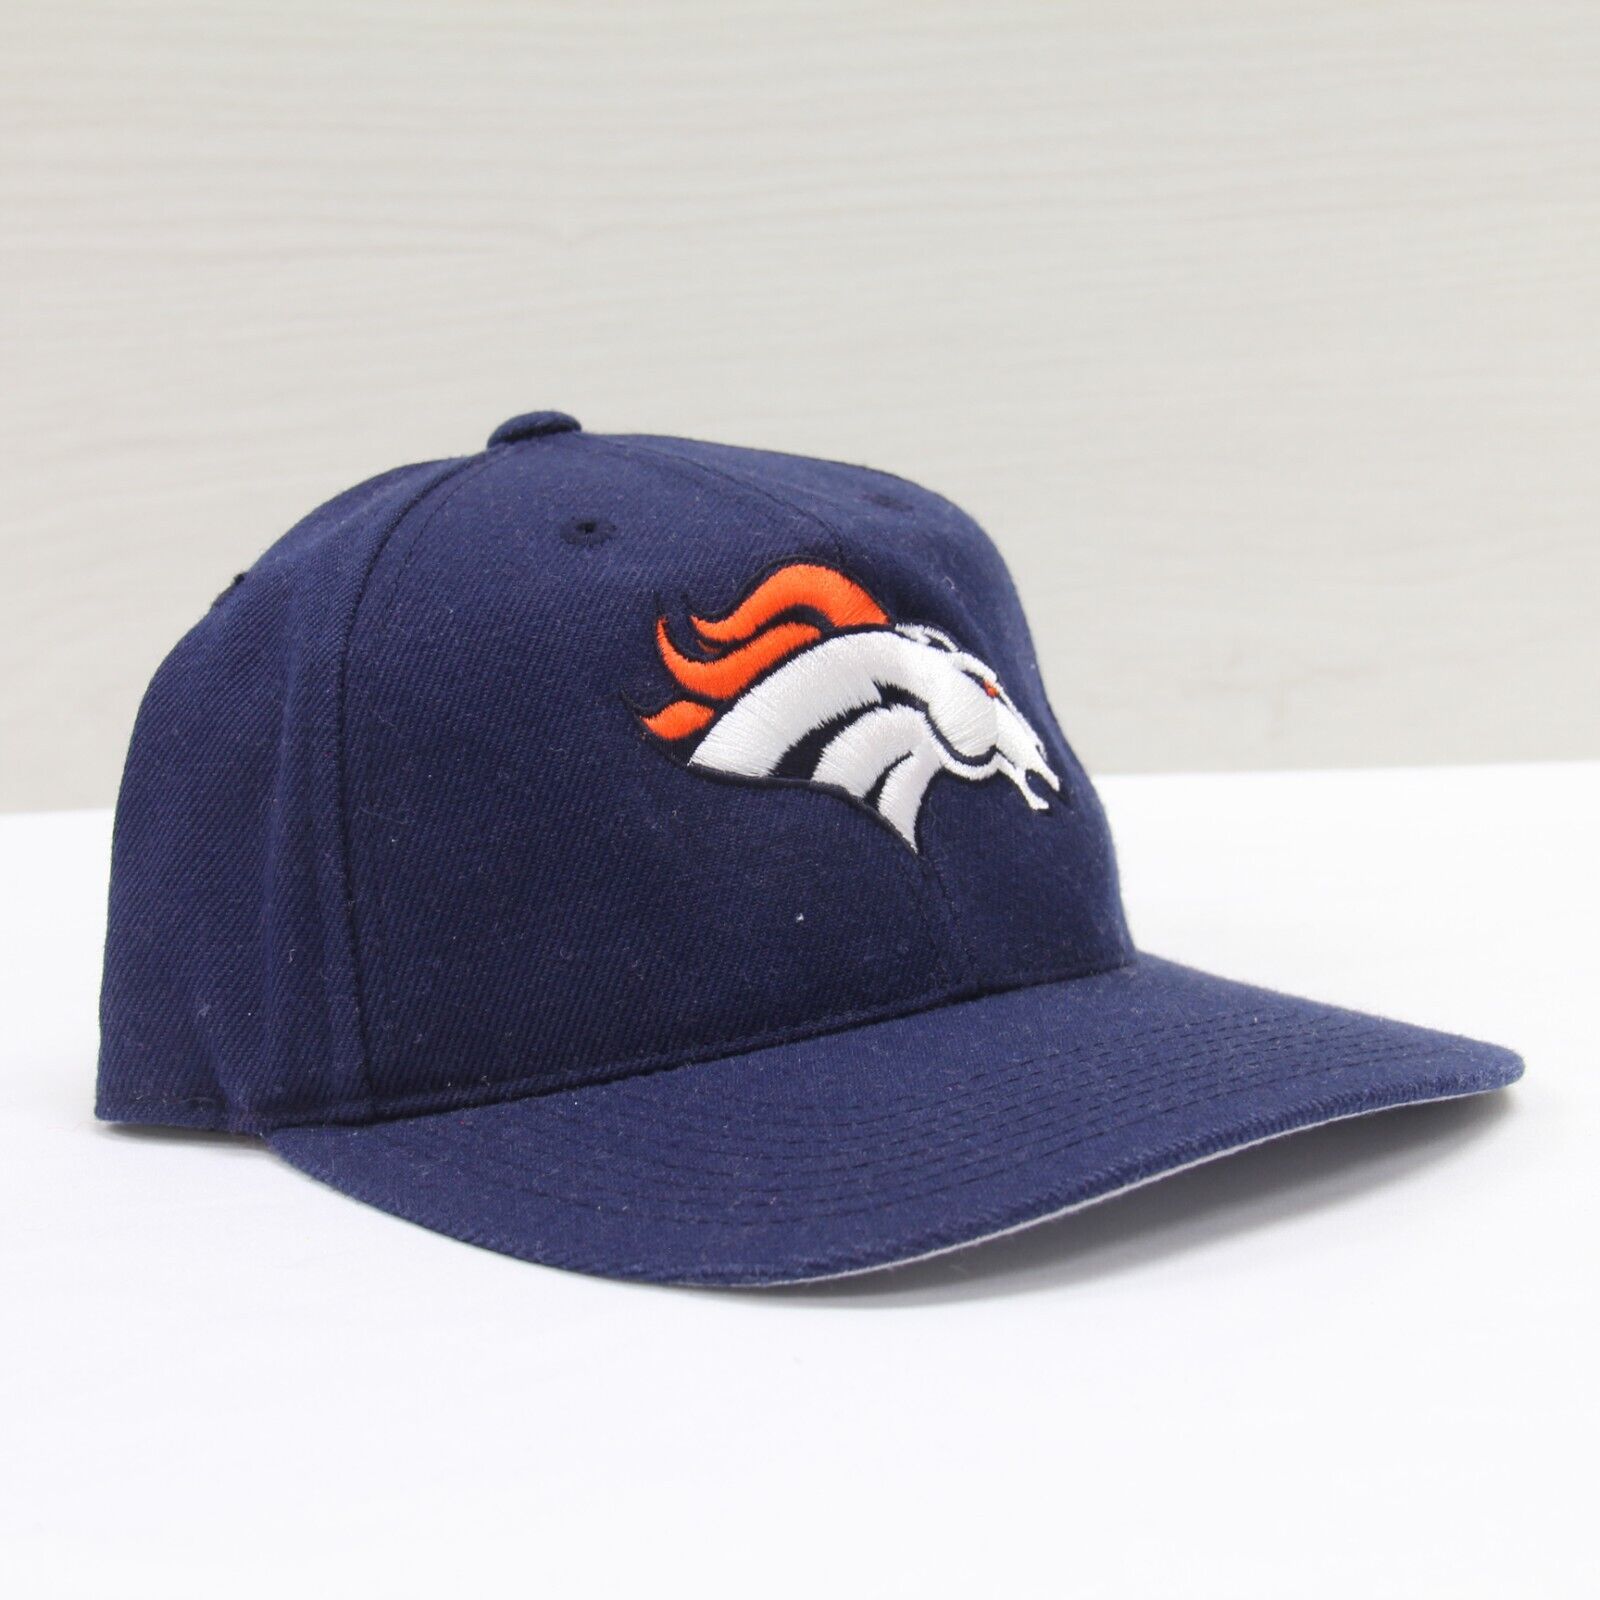 Vintage Denver Broncos Sports Specialties Wool Fitted Hat Cap 7 1